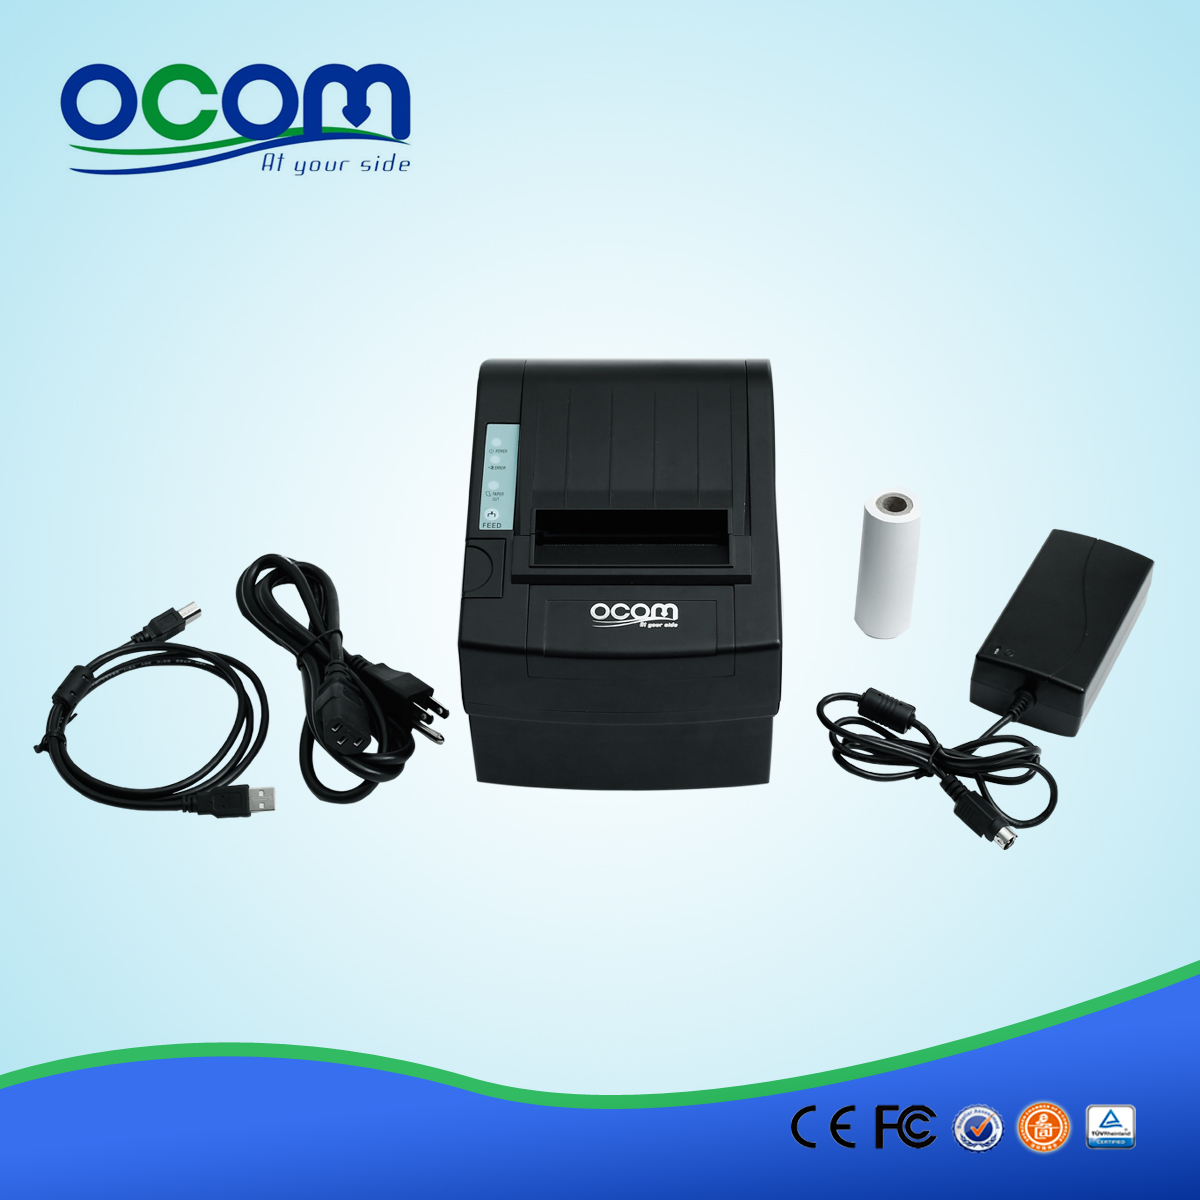 3-дюймовый Wi-Fi термопринтер OCPP-806-W